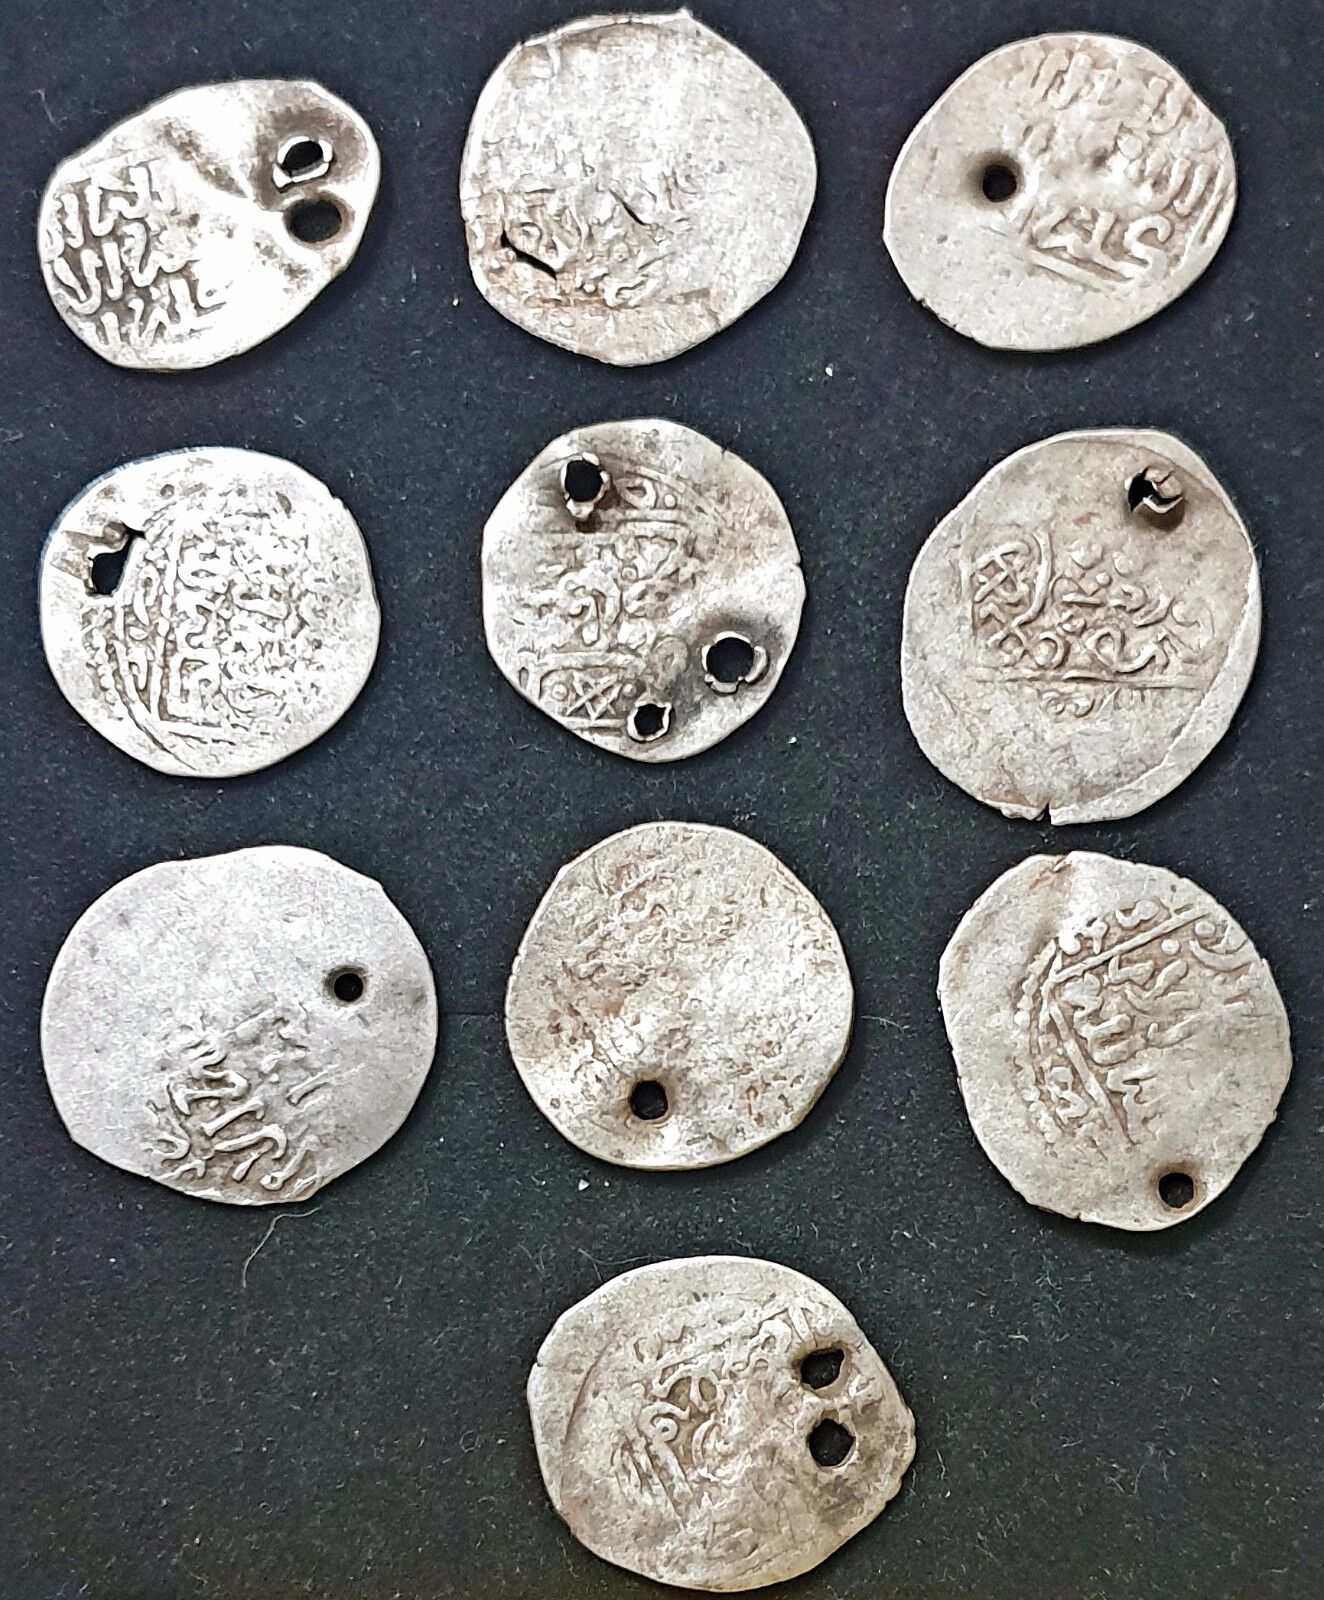 FANTASTIC Vintage Silver LOT of 10 RANDOM HOLED COINS Necklace Fibula Collection Unbranded